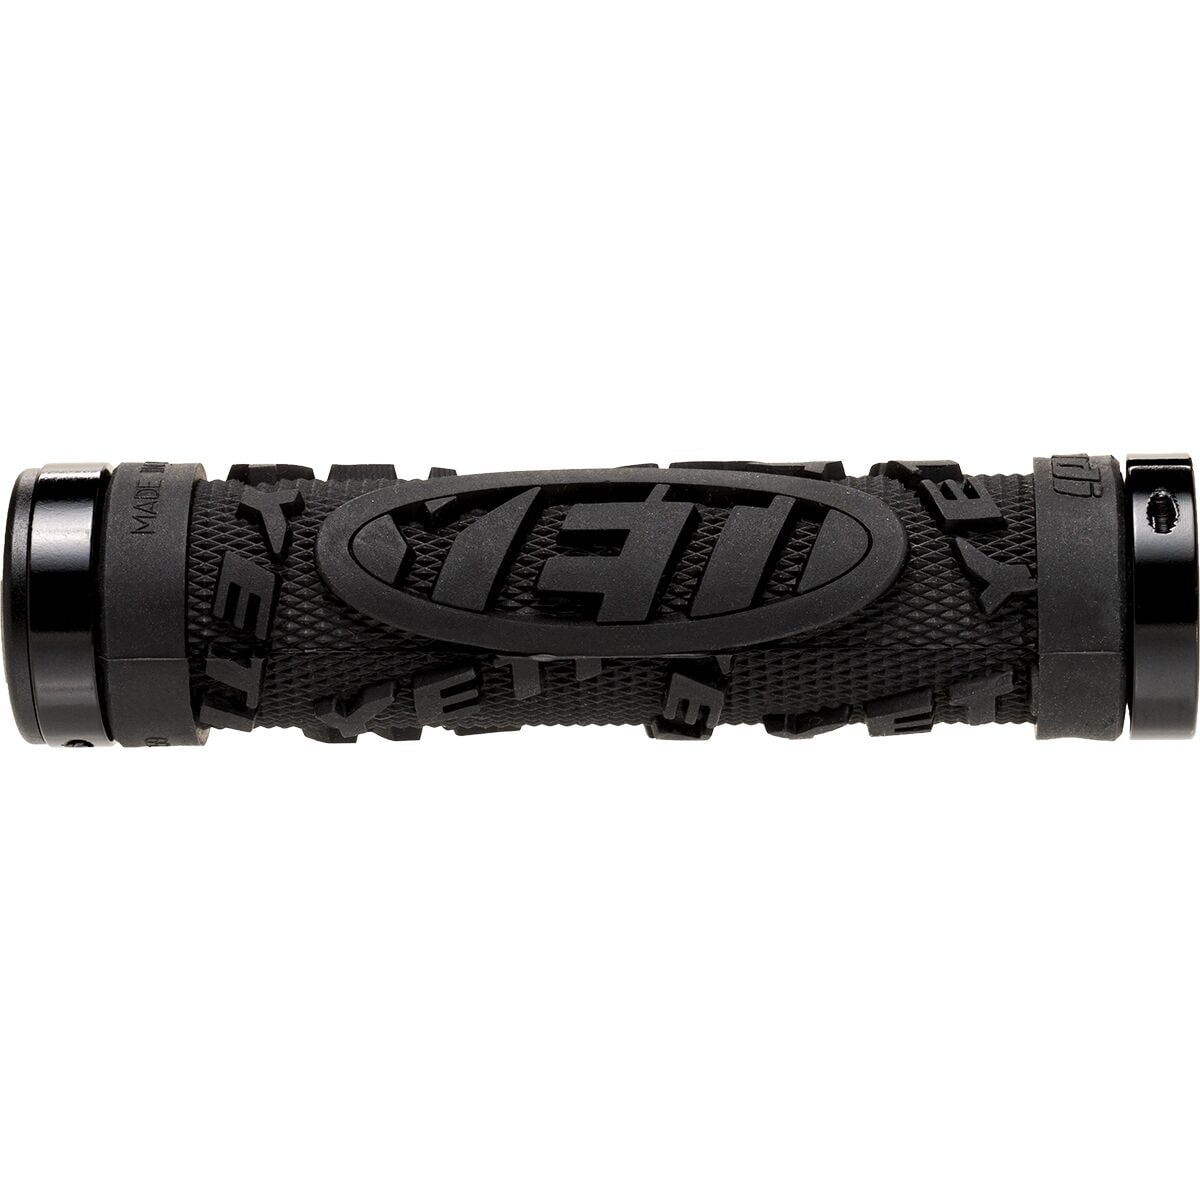 ODI Yeti Hard Core Lock-On Grips Black, One Size -  HT3689